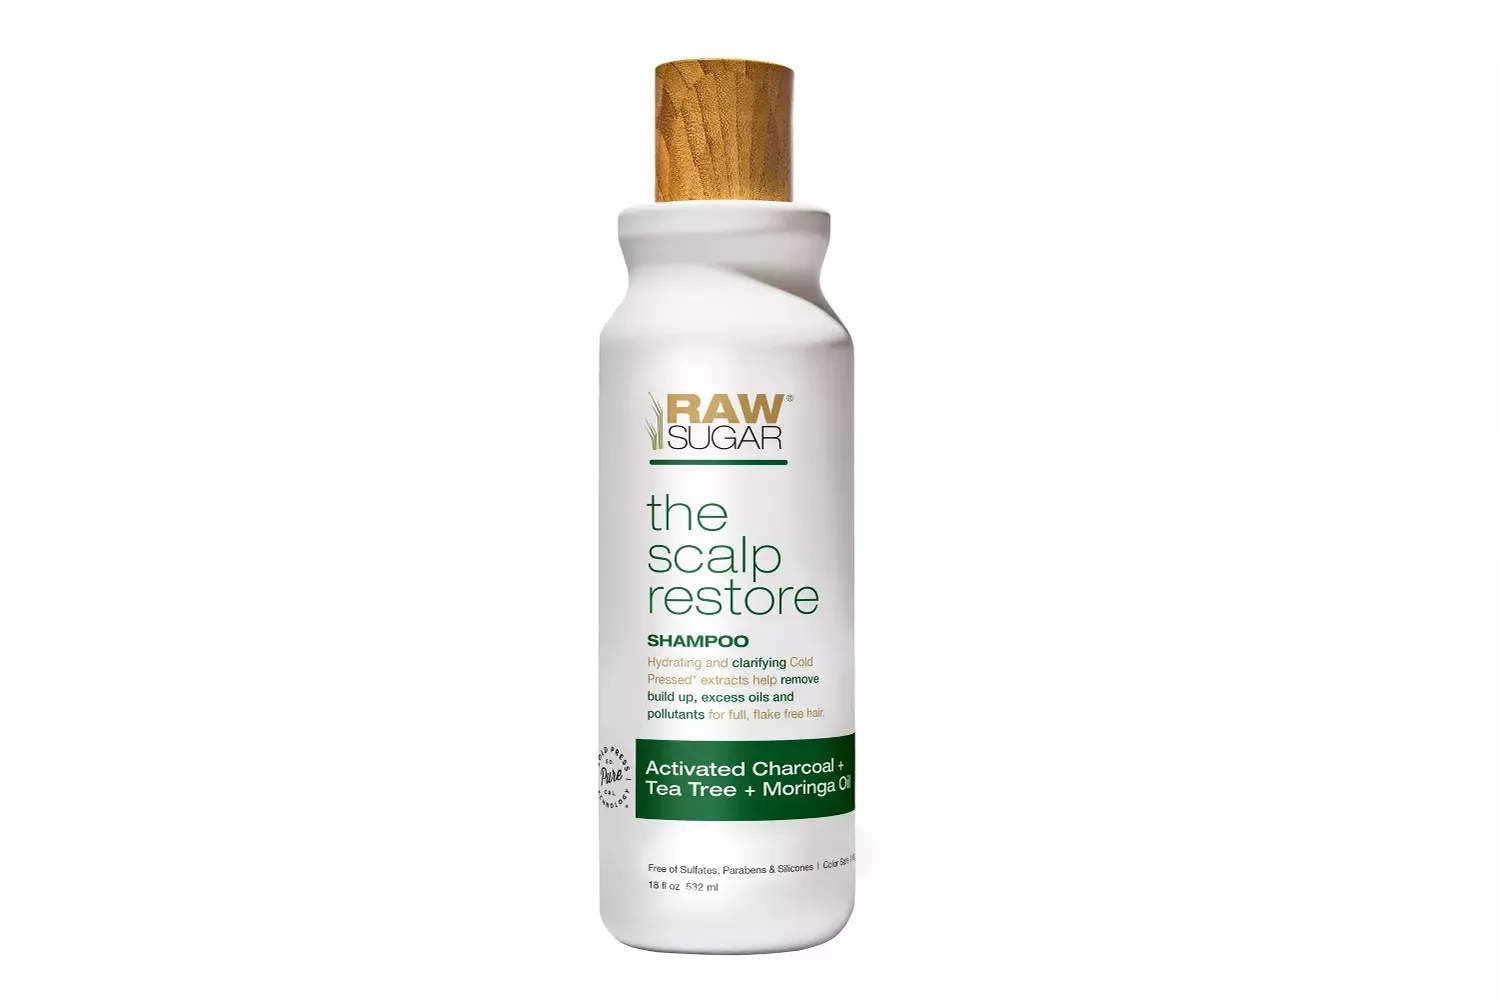 Raw Sugar Shampoo Scalp Restore Activated Charcoal + Tea Tree + Moringa Oil